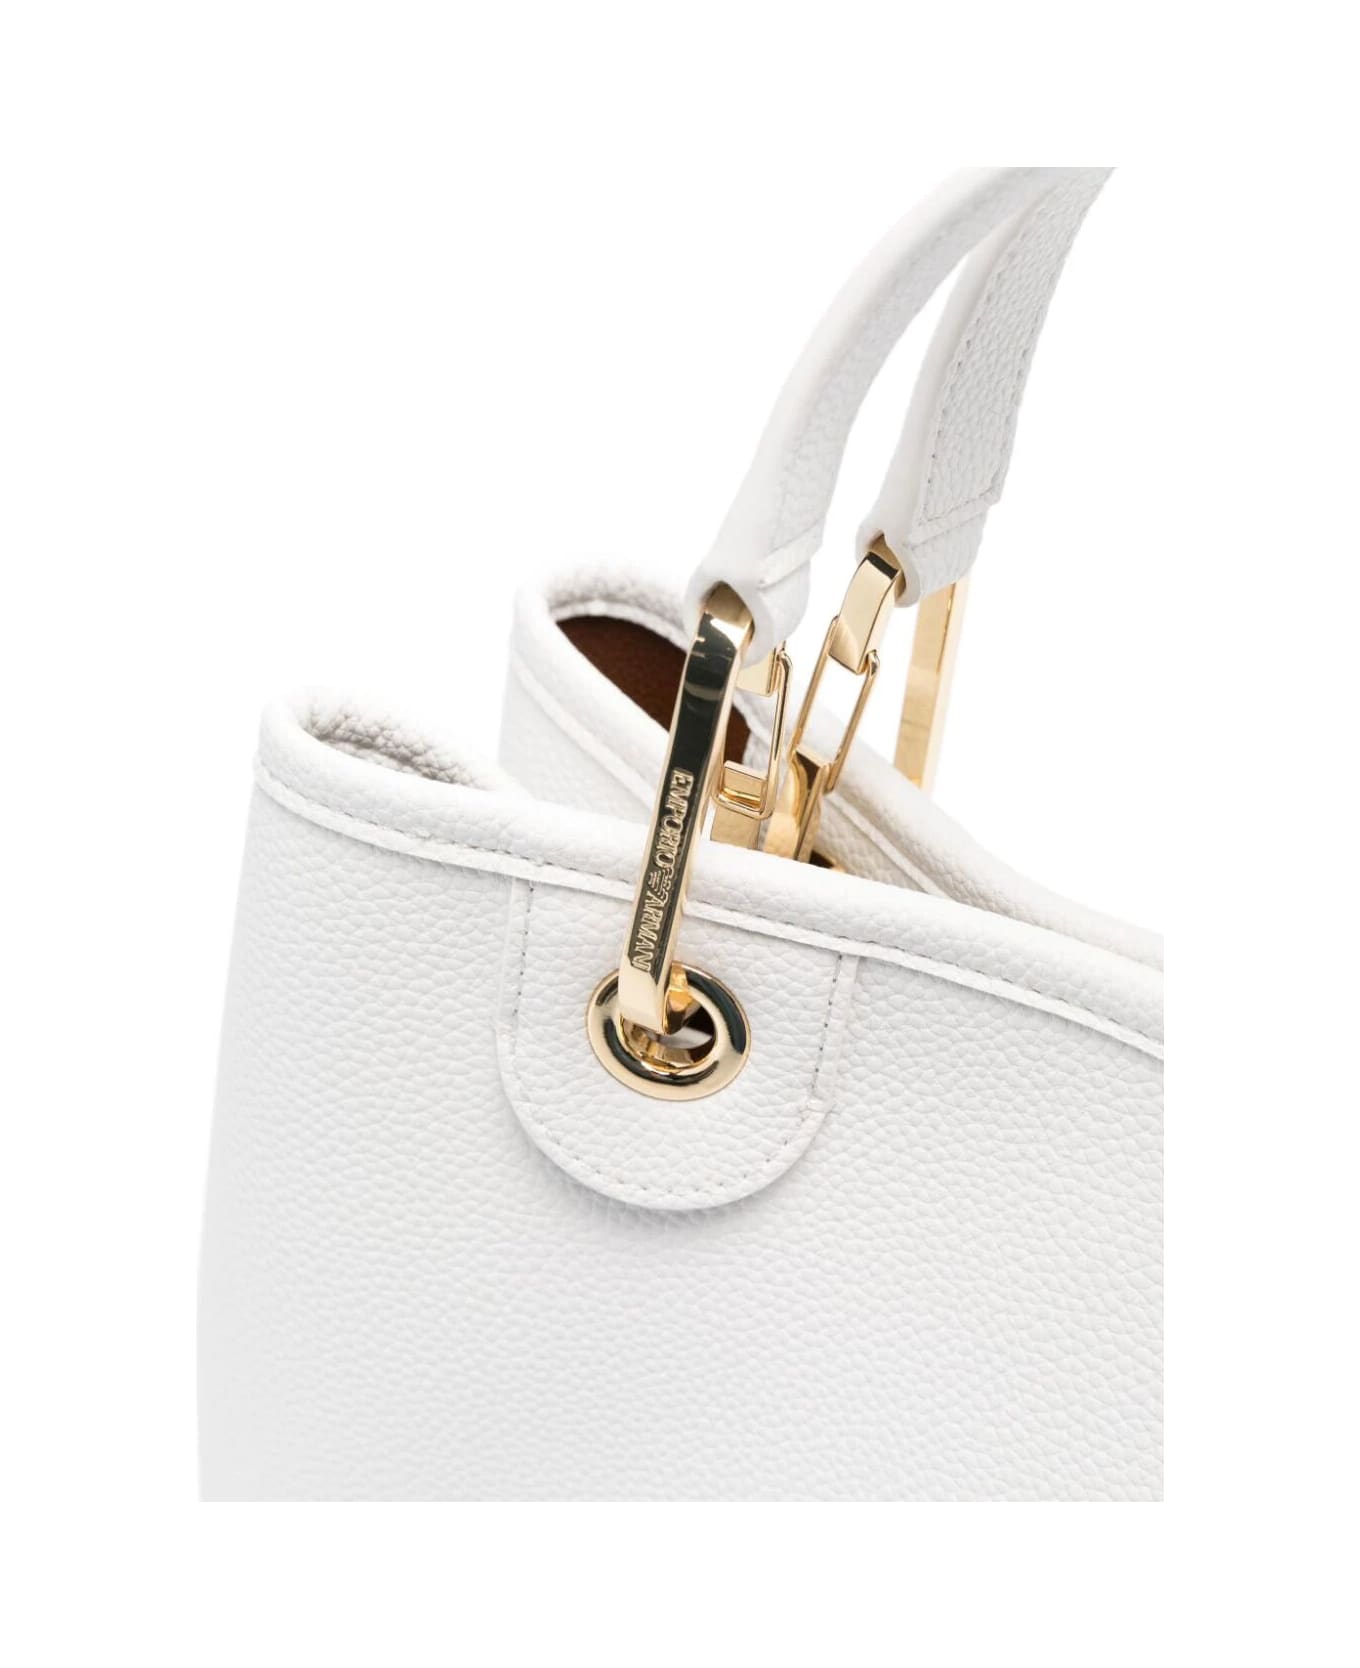 Emporio Armani Shopping Bag - White Suede